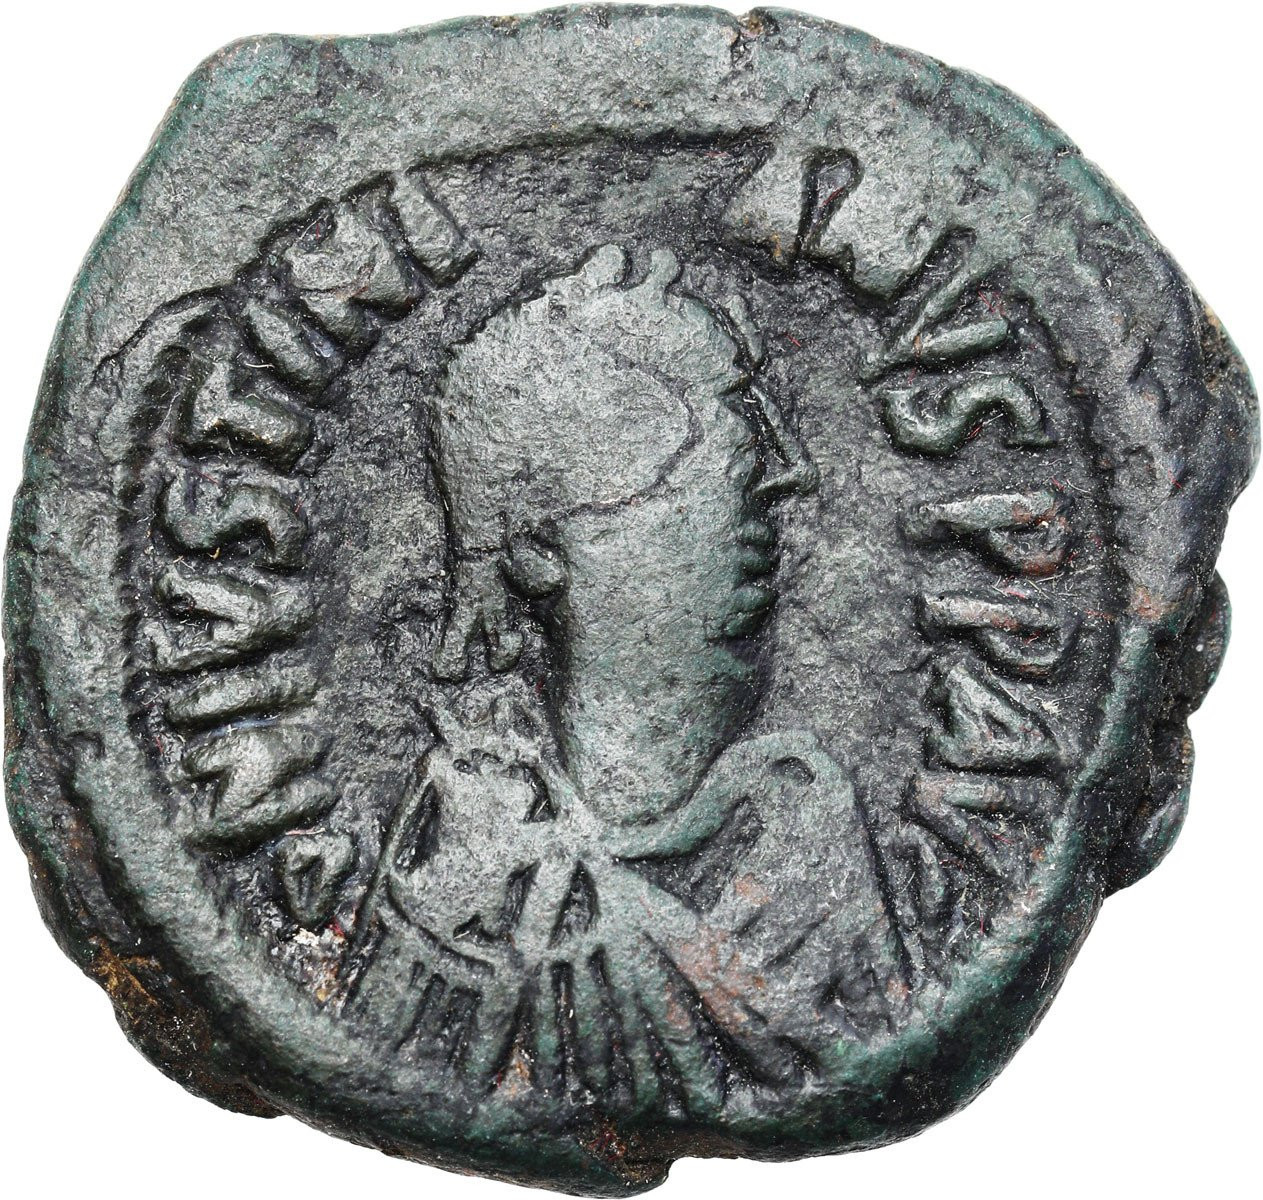 Bizancjum, Follis, Justynian I 227 - 565 n.e., Konstantynopol